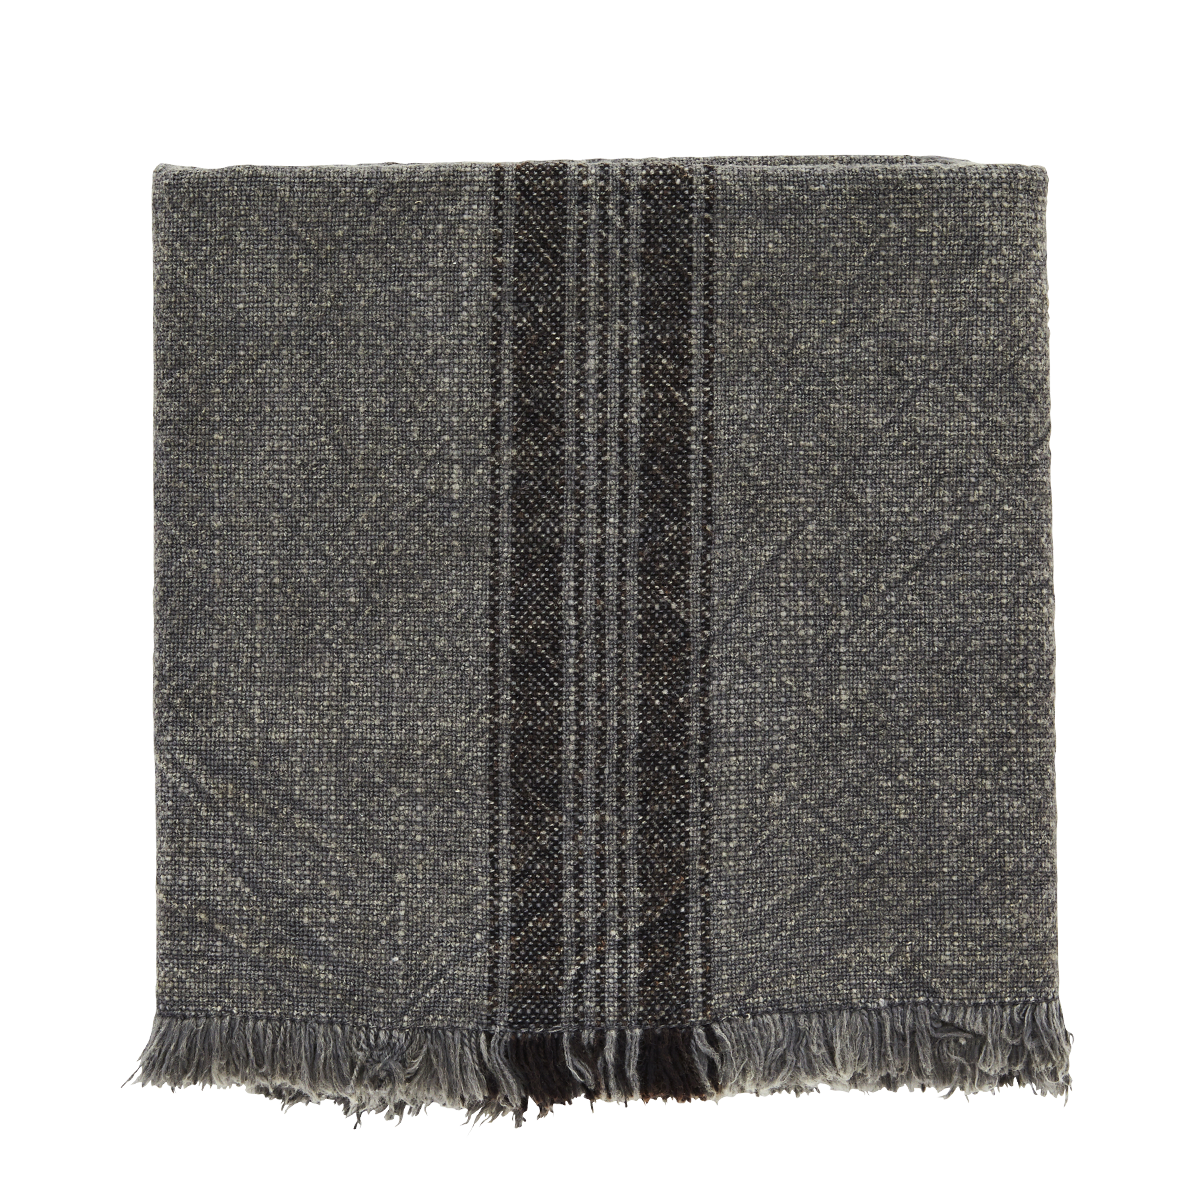 Madam Stoltz Dark Grey and Black Striped Tea Towel